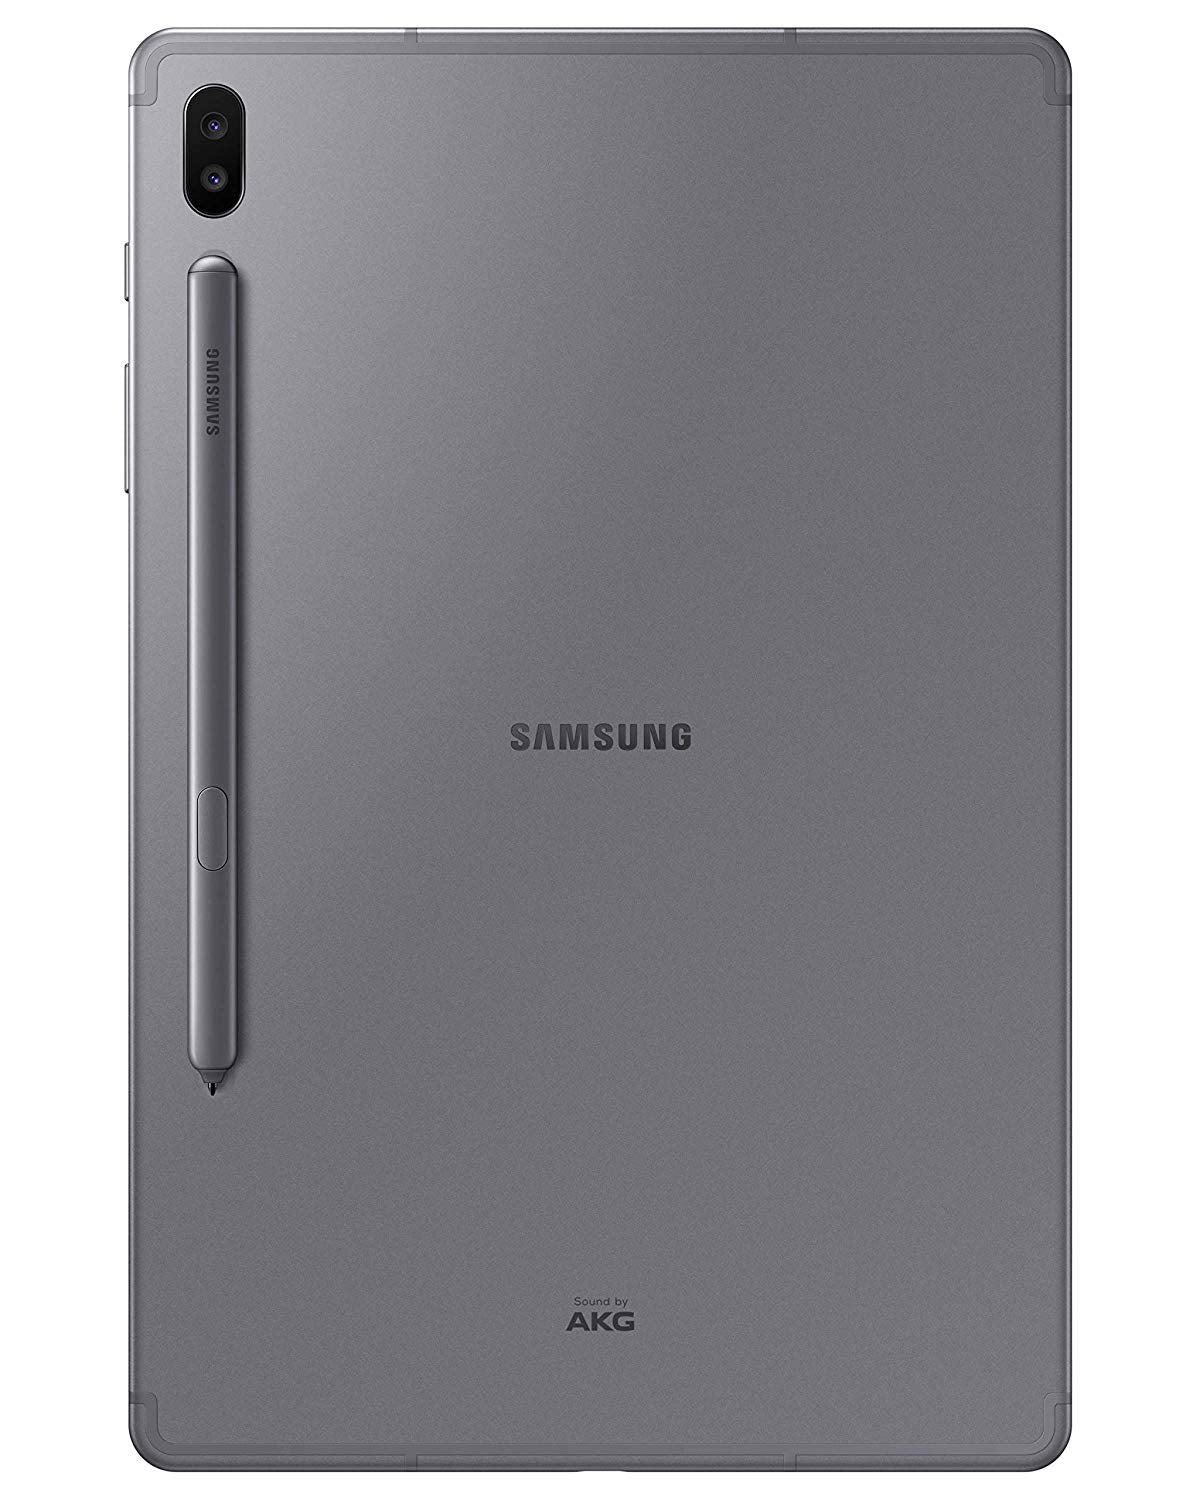 Samsung Galaxy Tab S6 10.5 (2019) Wi-Fi 256GB - Mountain Gray - SM-T860NZALXAR